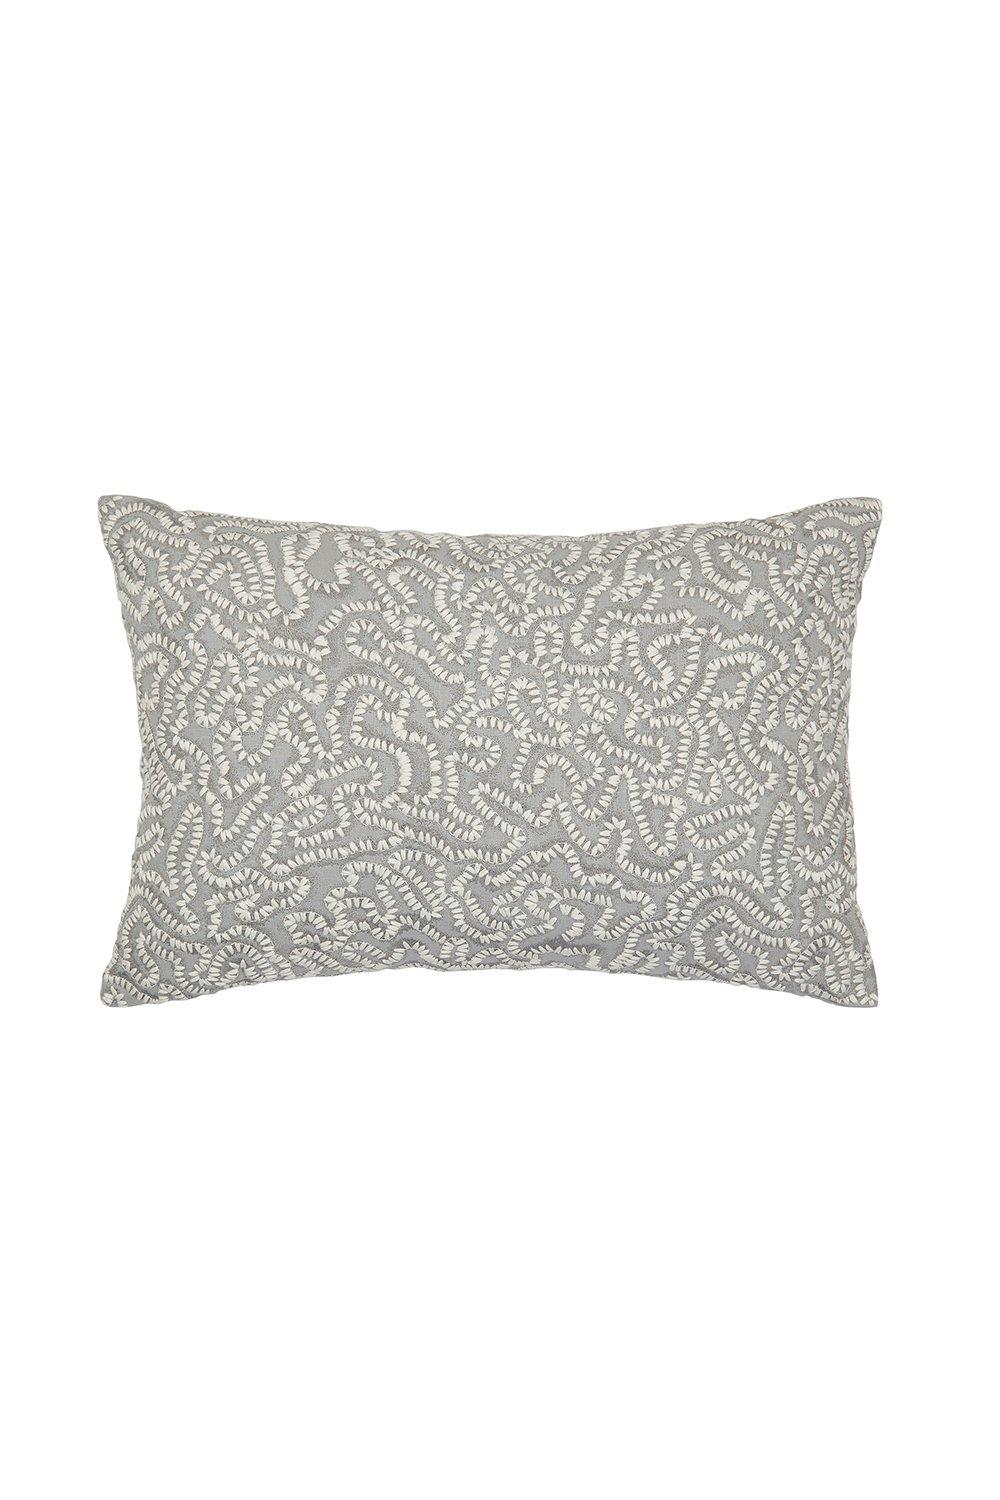 Maze' Embroidered Cushion